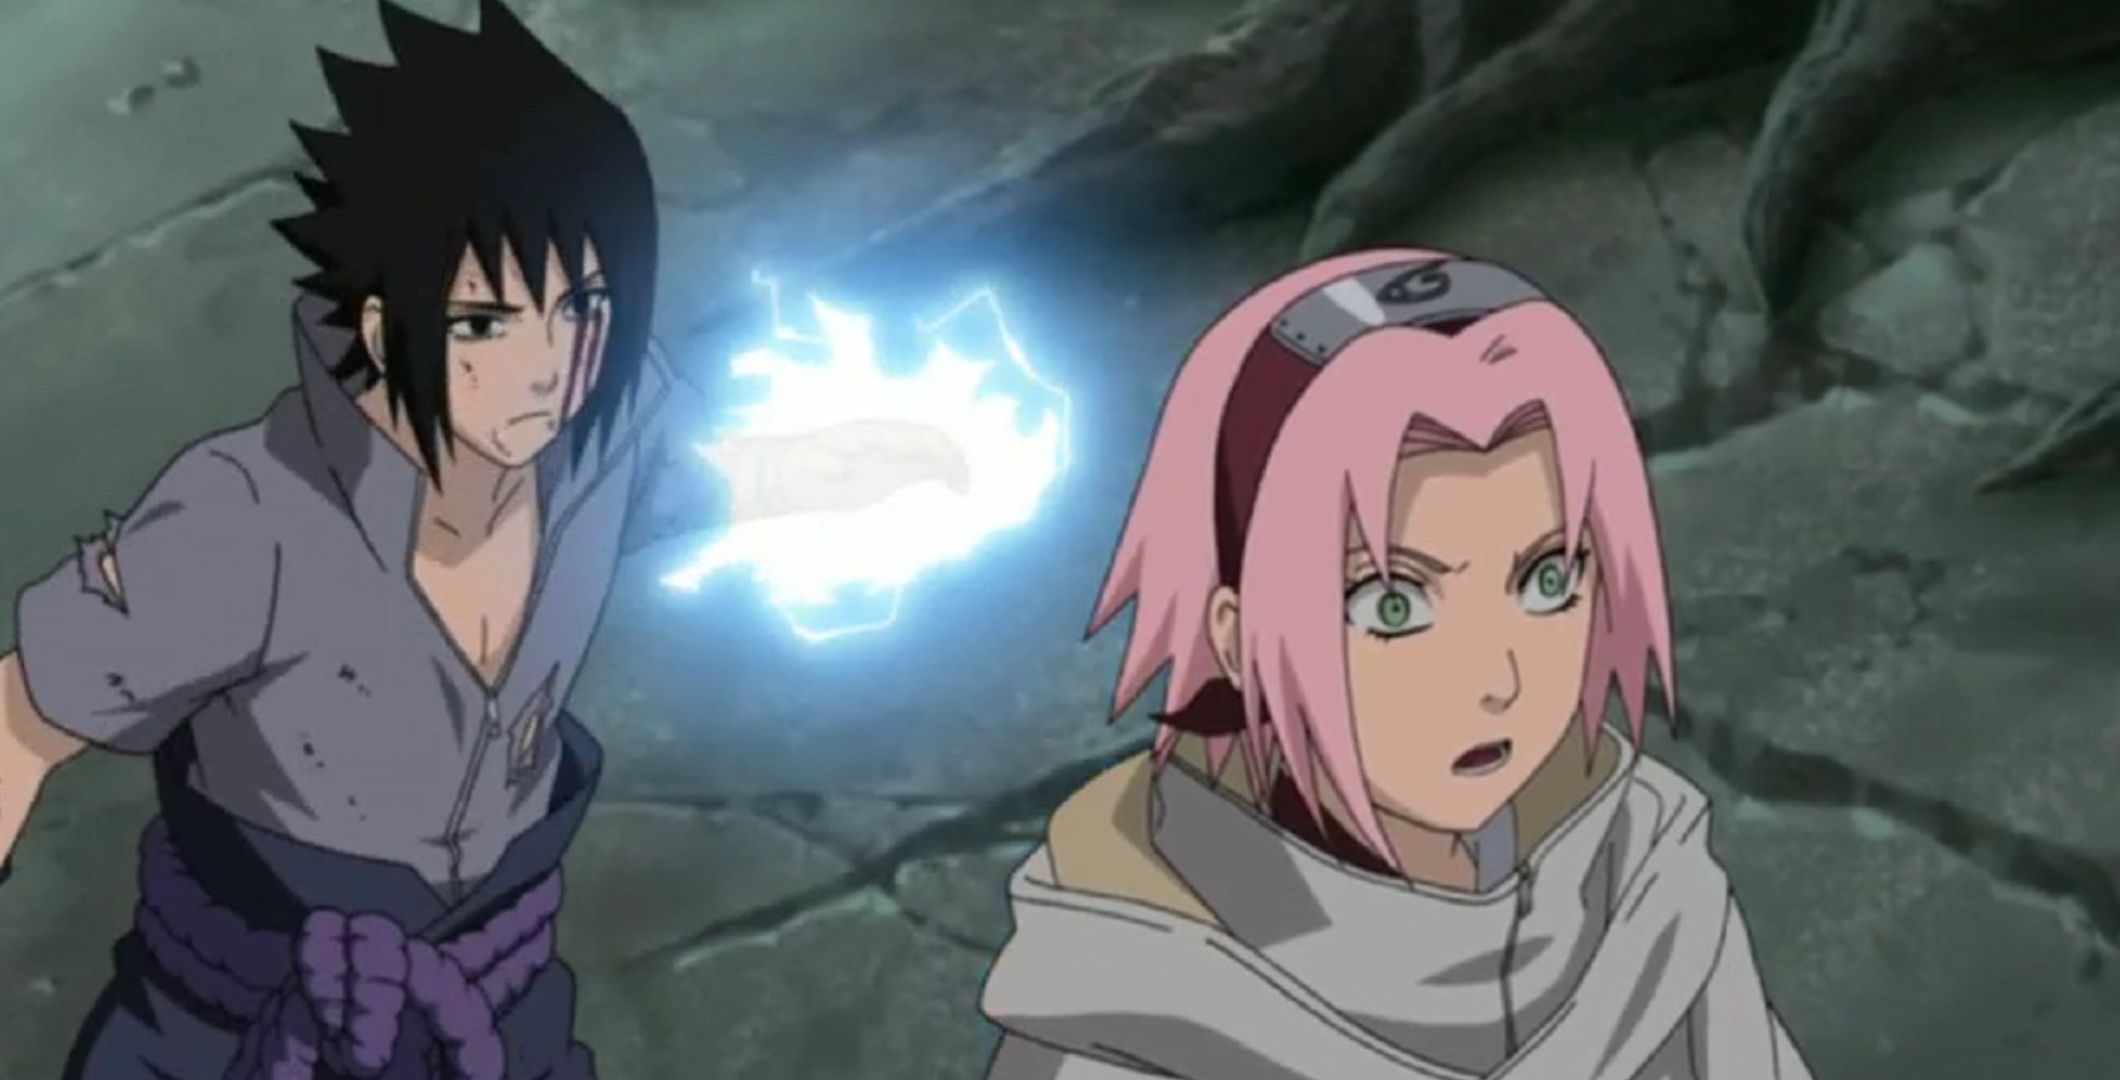 Sasuke comes up behind Sakura with lightning in Naruto Shippuden